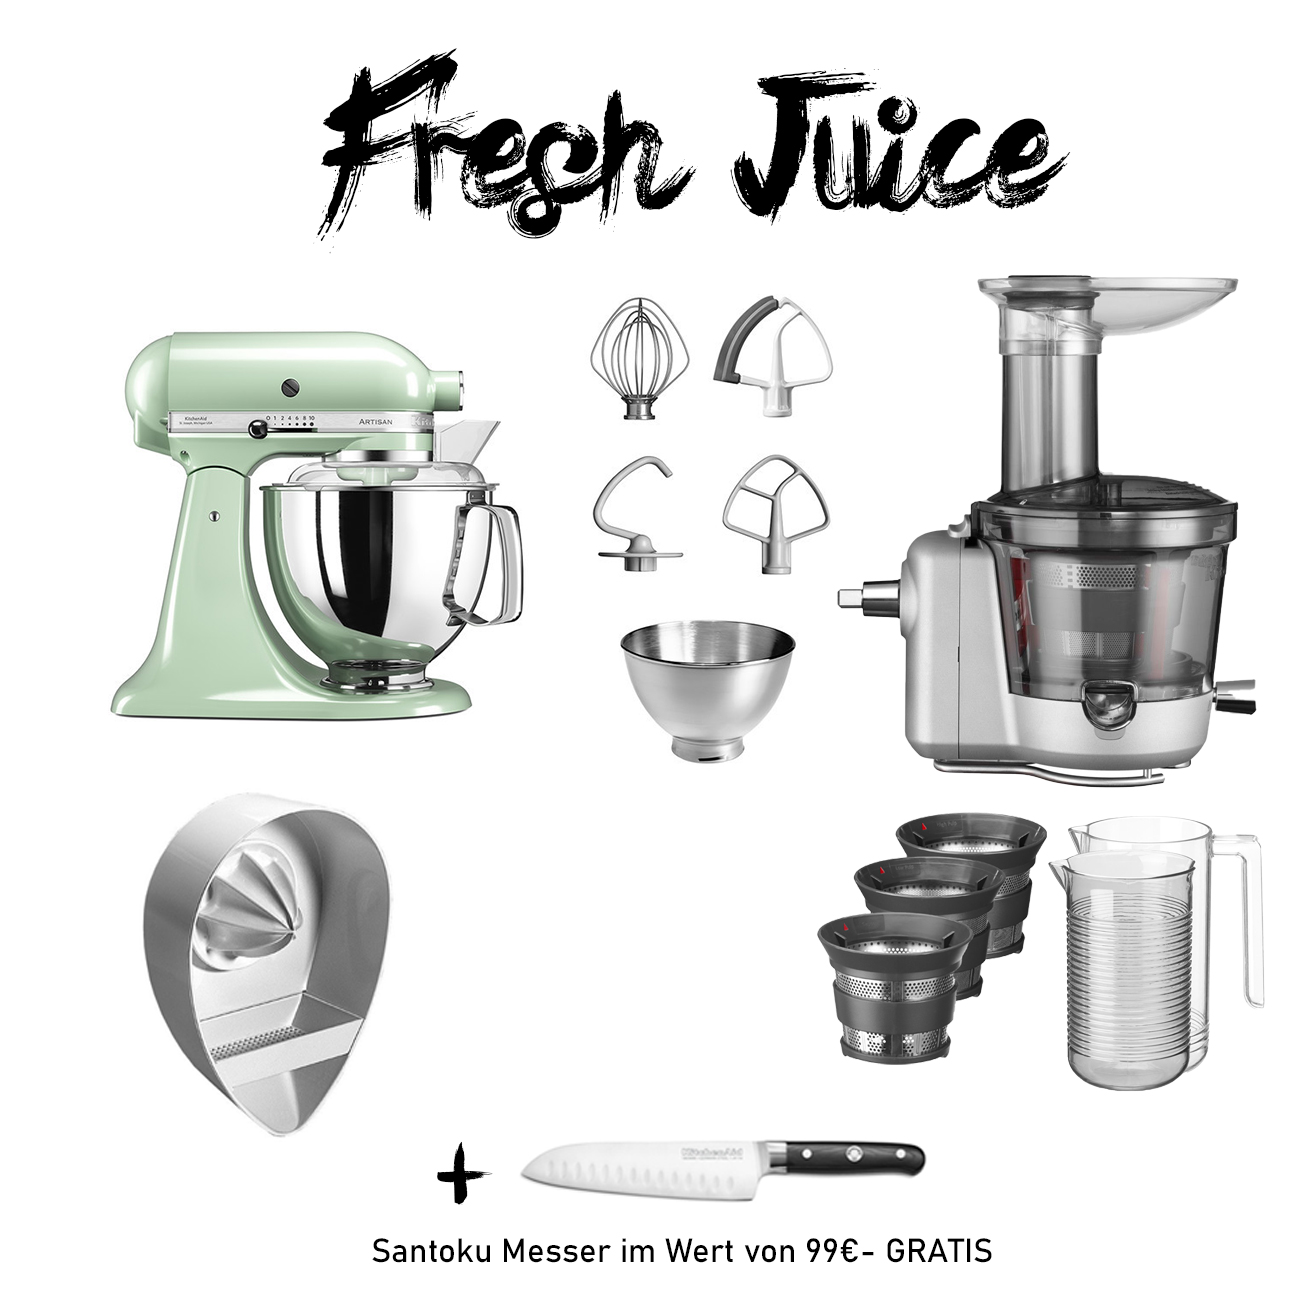 KitchenAid 5KSM175PS Fresh Juice Set